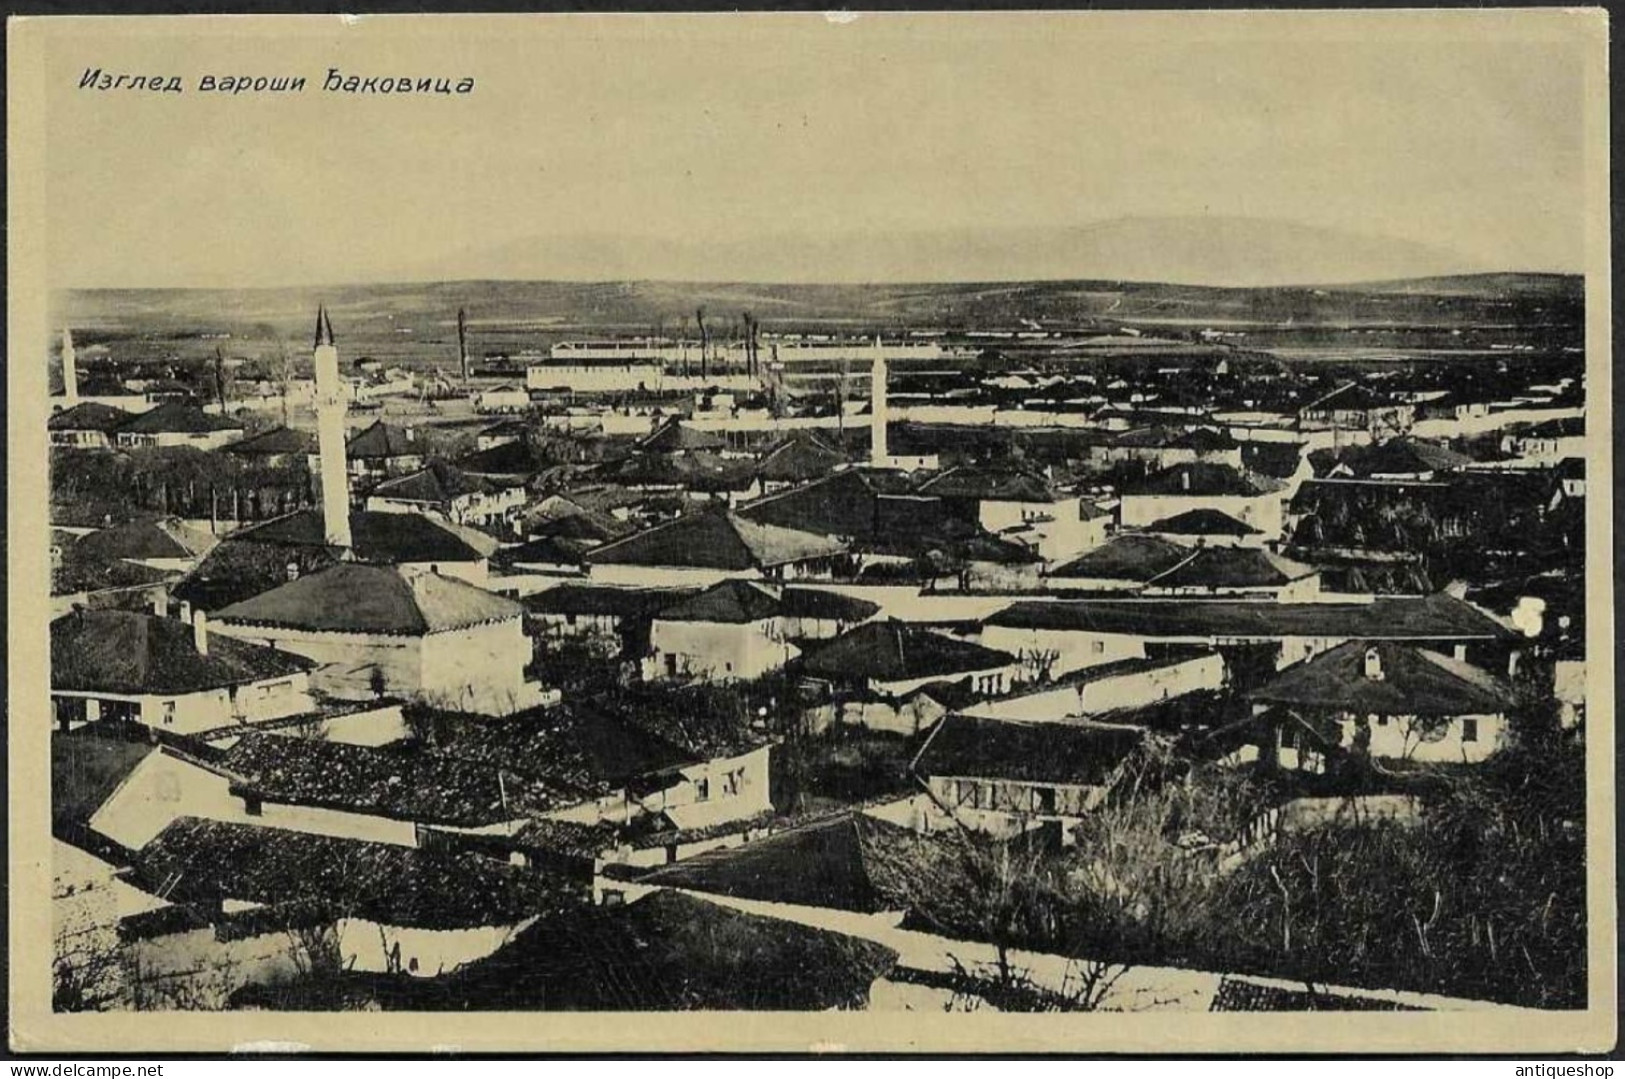 Kosovo-----Djakovica-----old Postcard - Kosovo